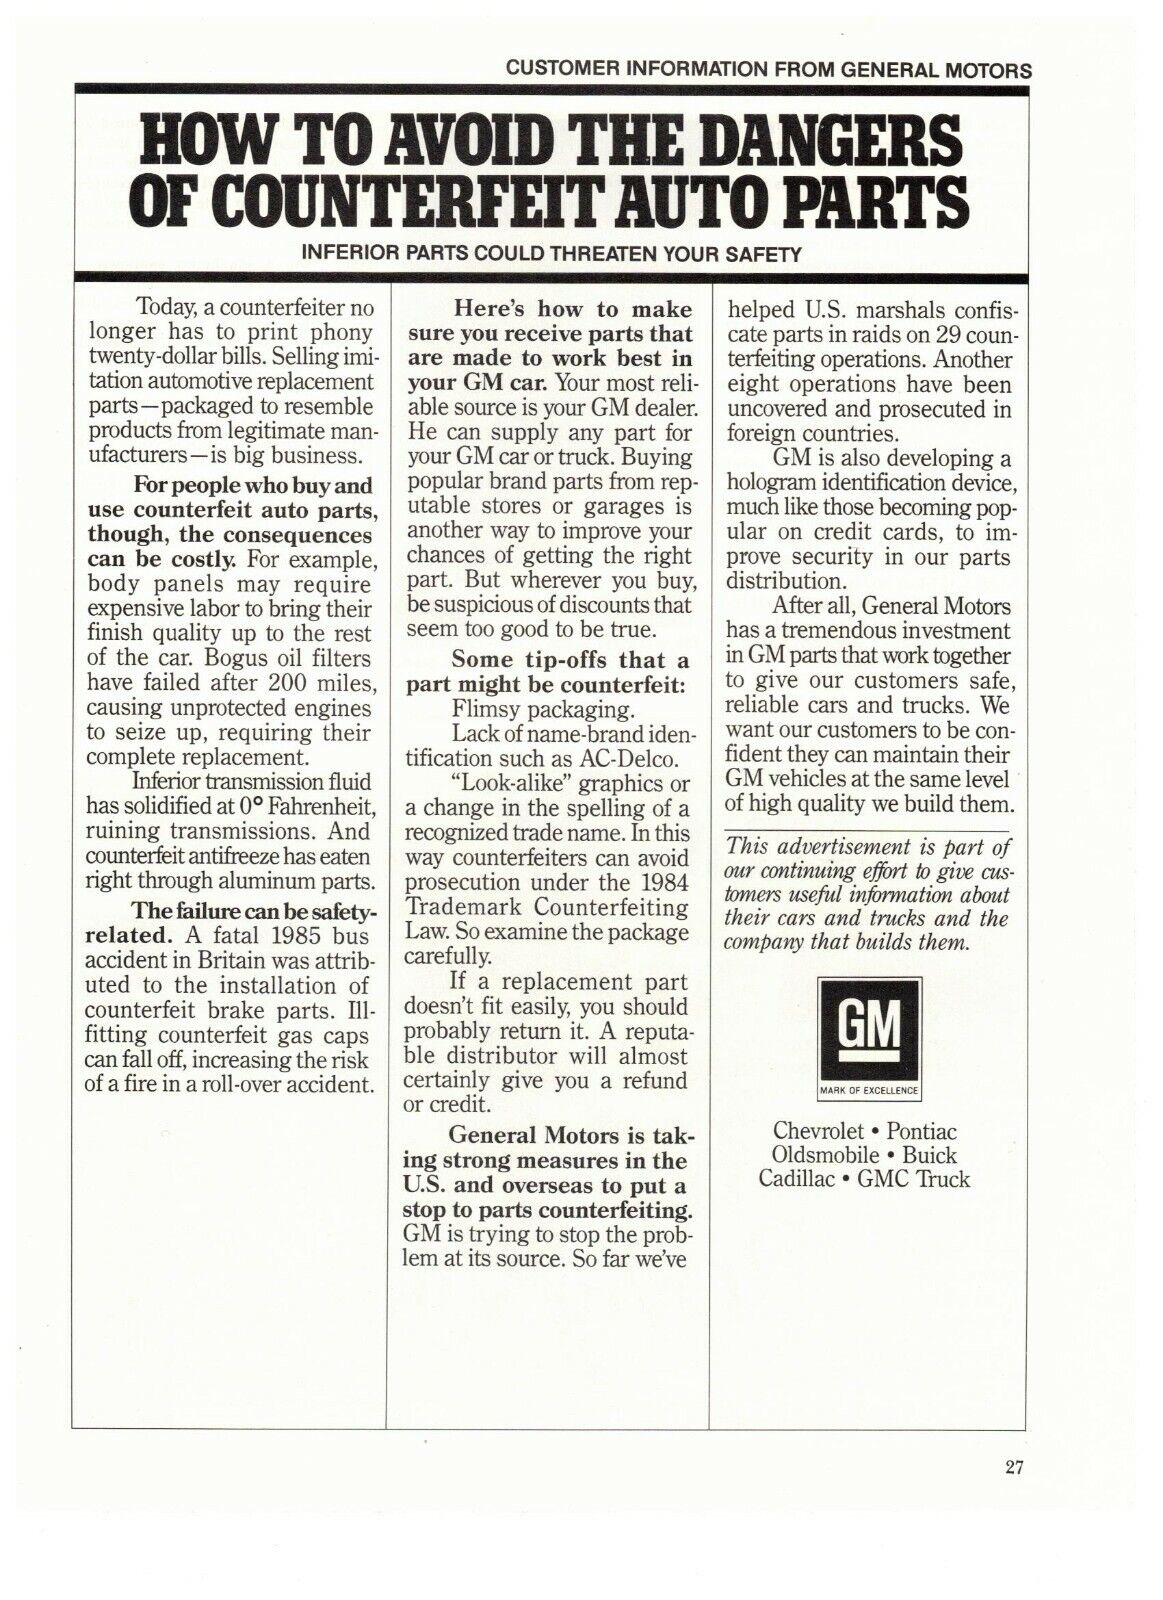 1986 GM General Motors Vintage Print Advertisement Avoid Counterfeit Auto Parts